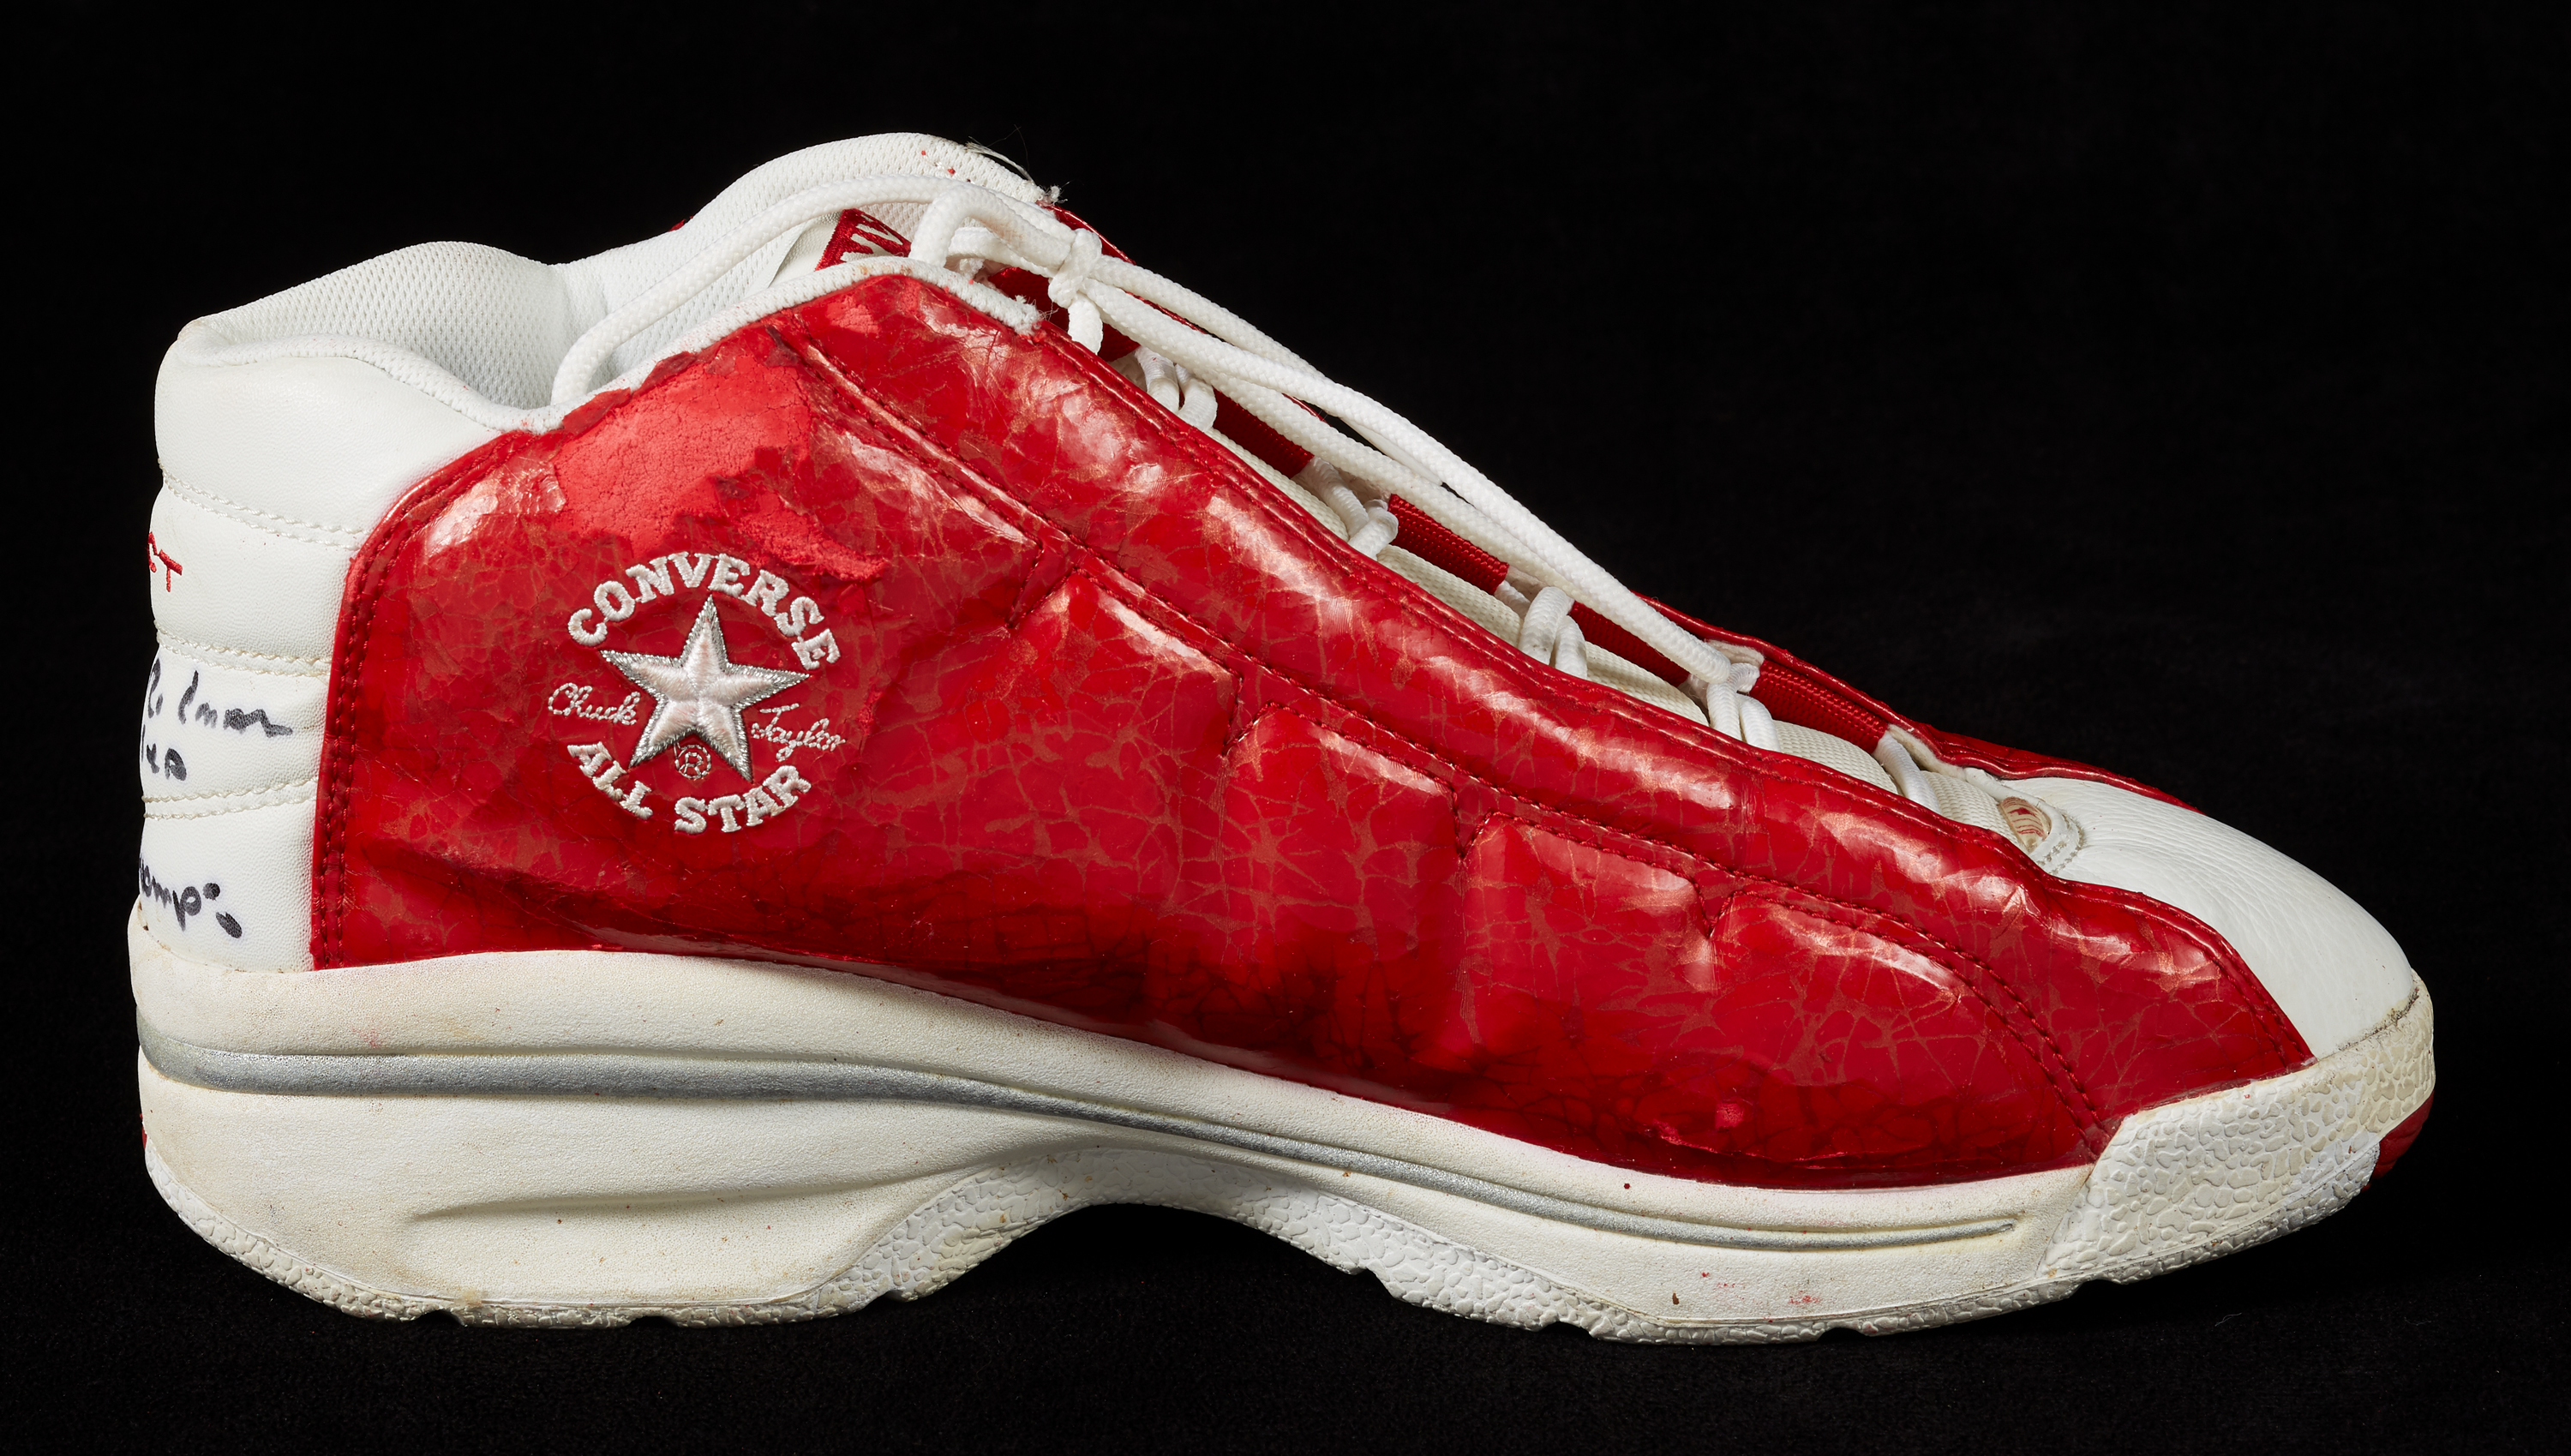 1996 Dennis Rodman Game Worn, Signed Chicago Bulls Sneaker - Worn